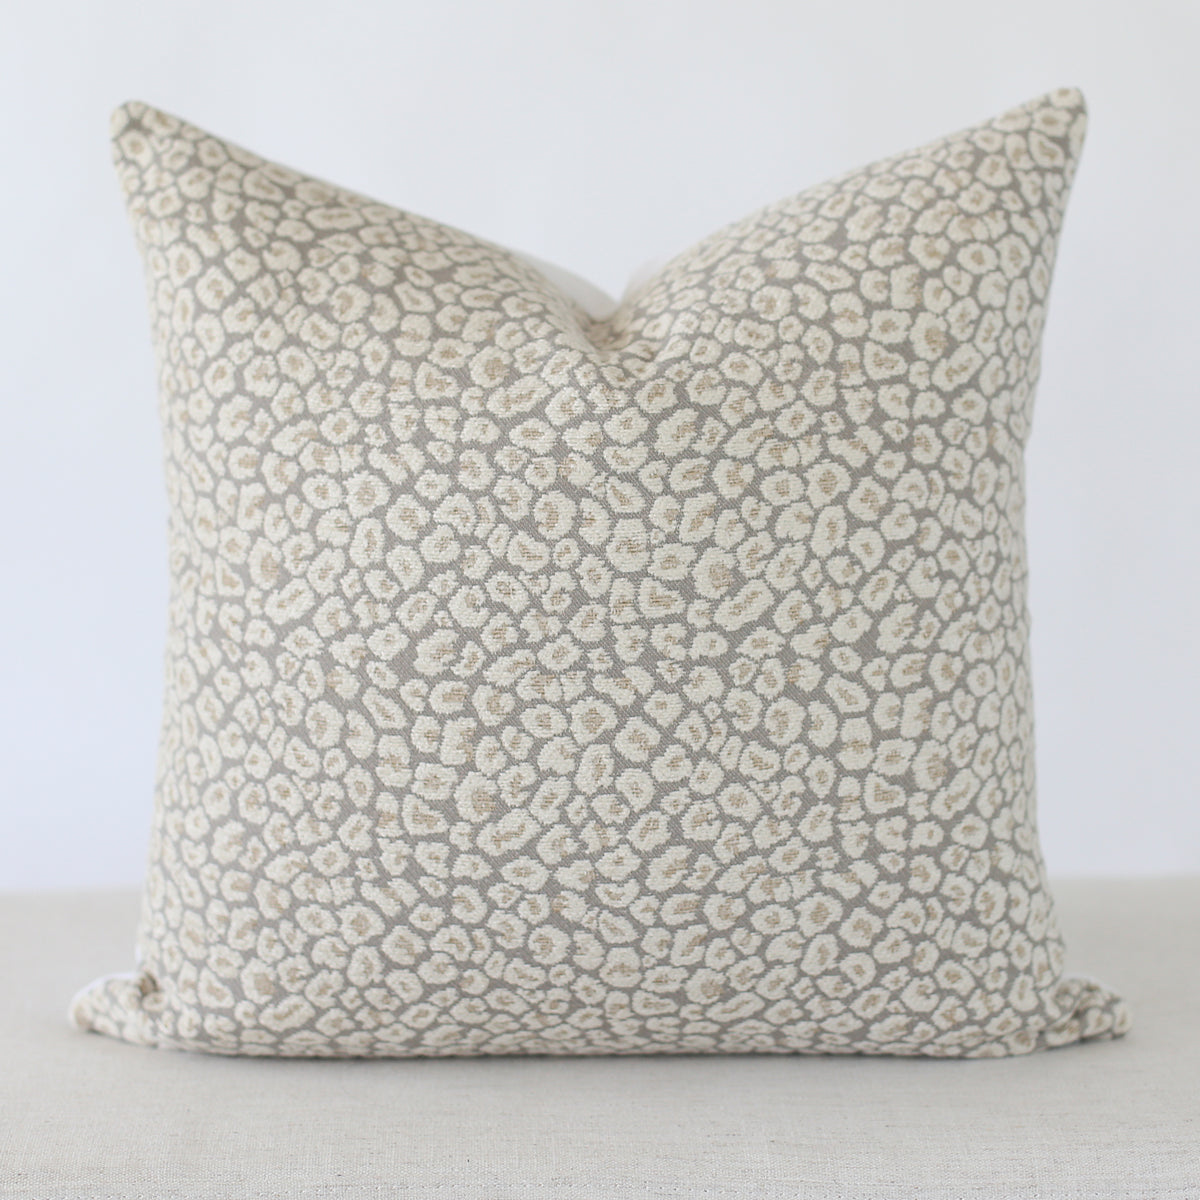 Grey and Cream Cheetah Print Pillow Cover